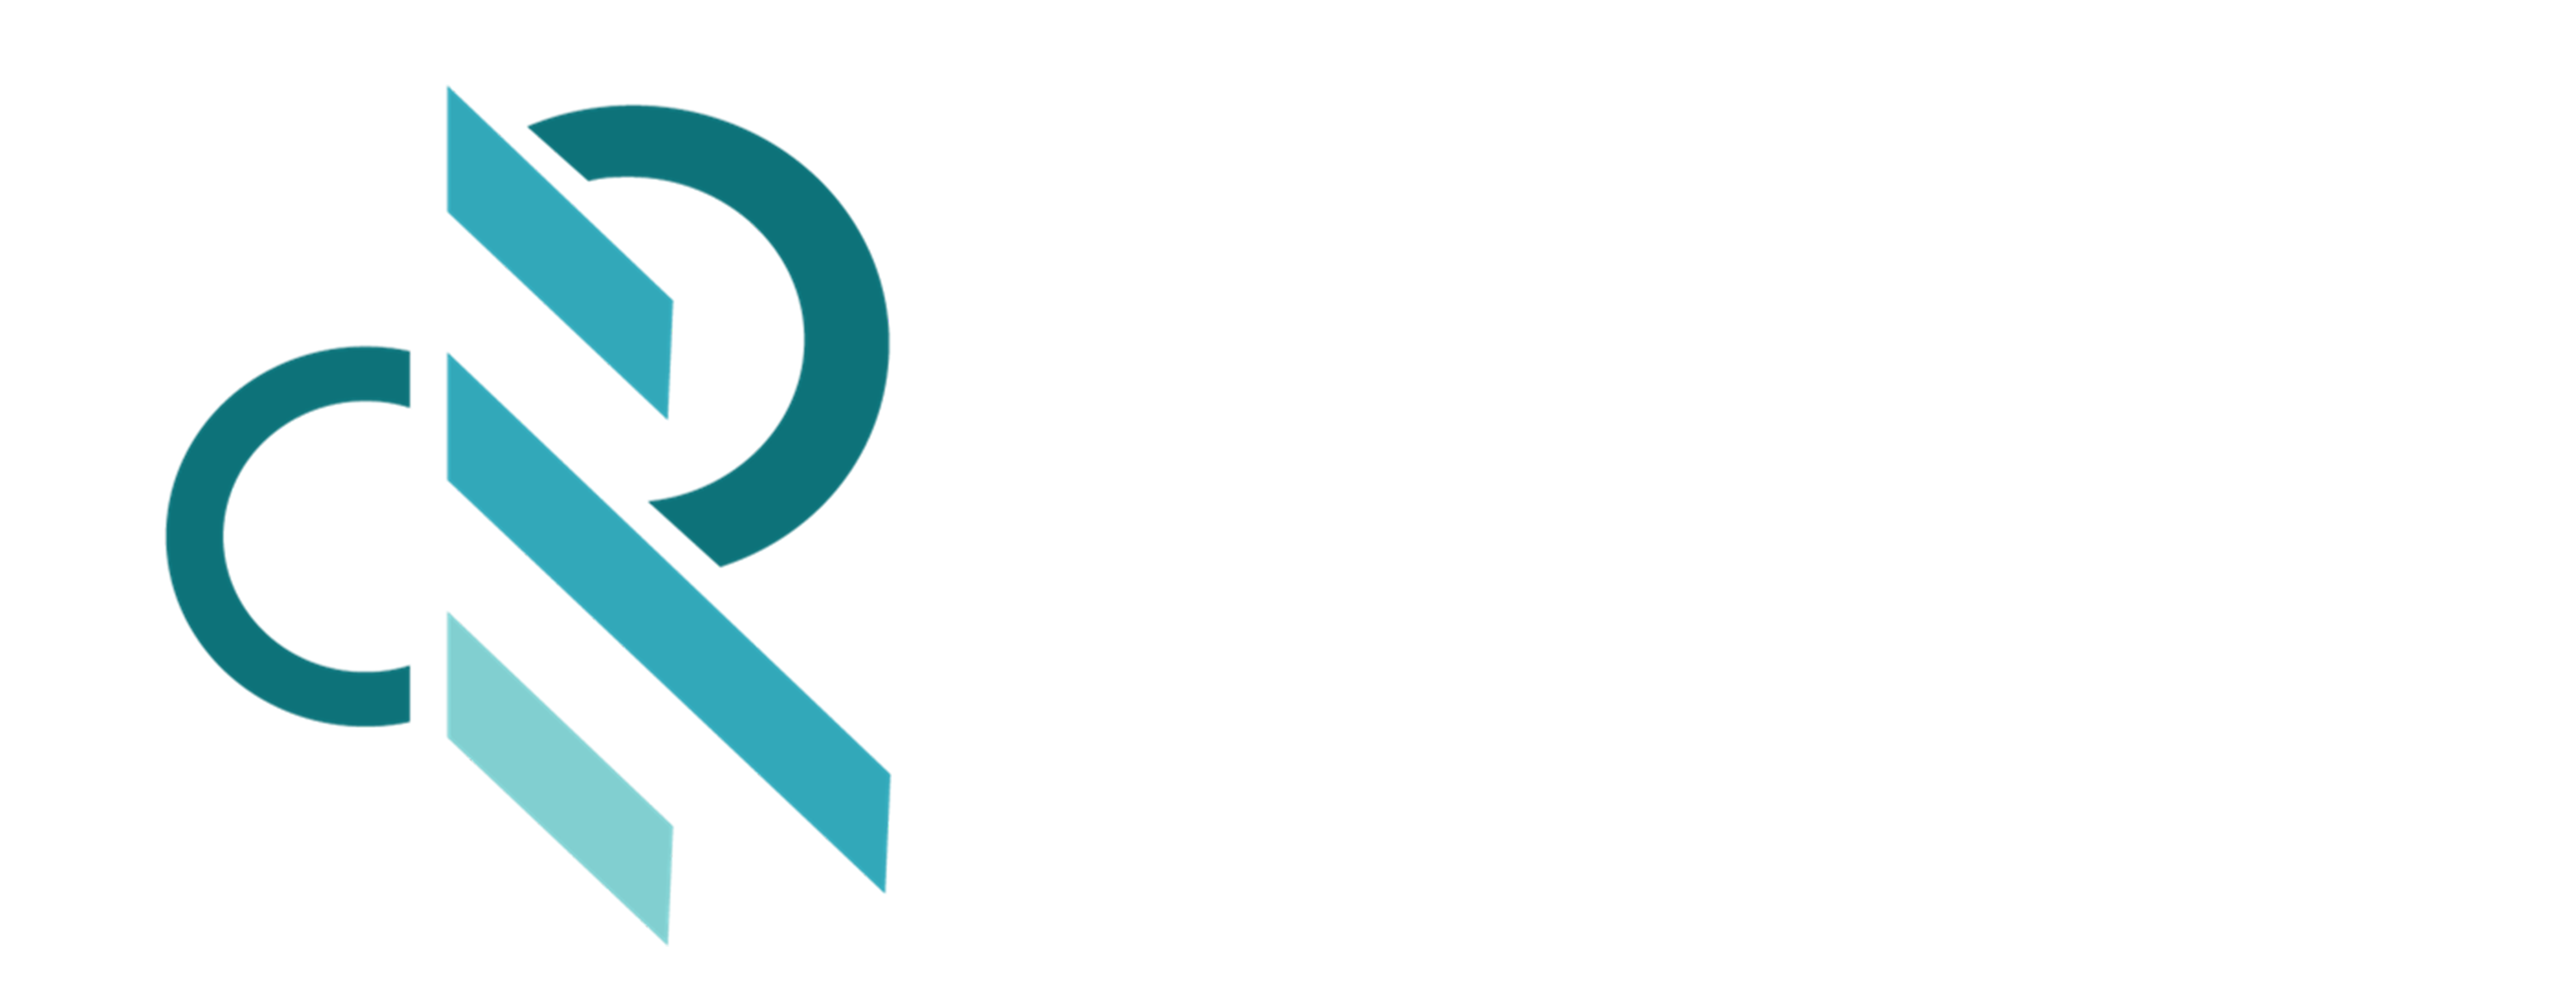 RIJO.pro